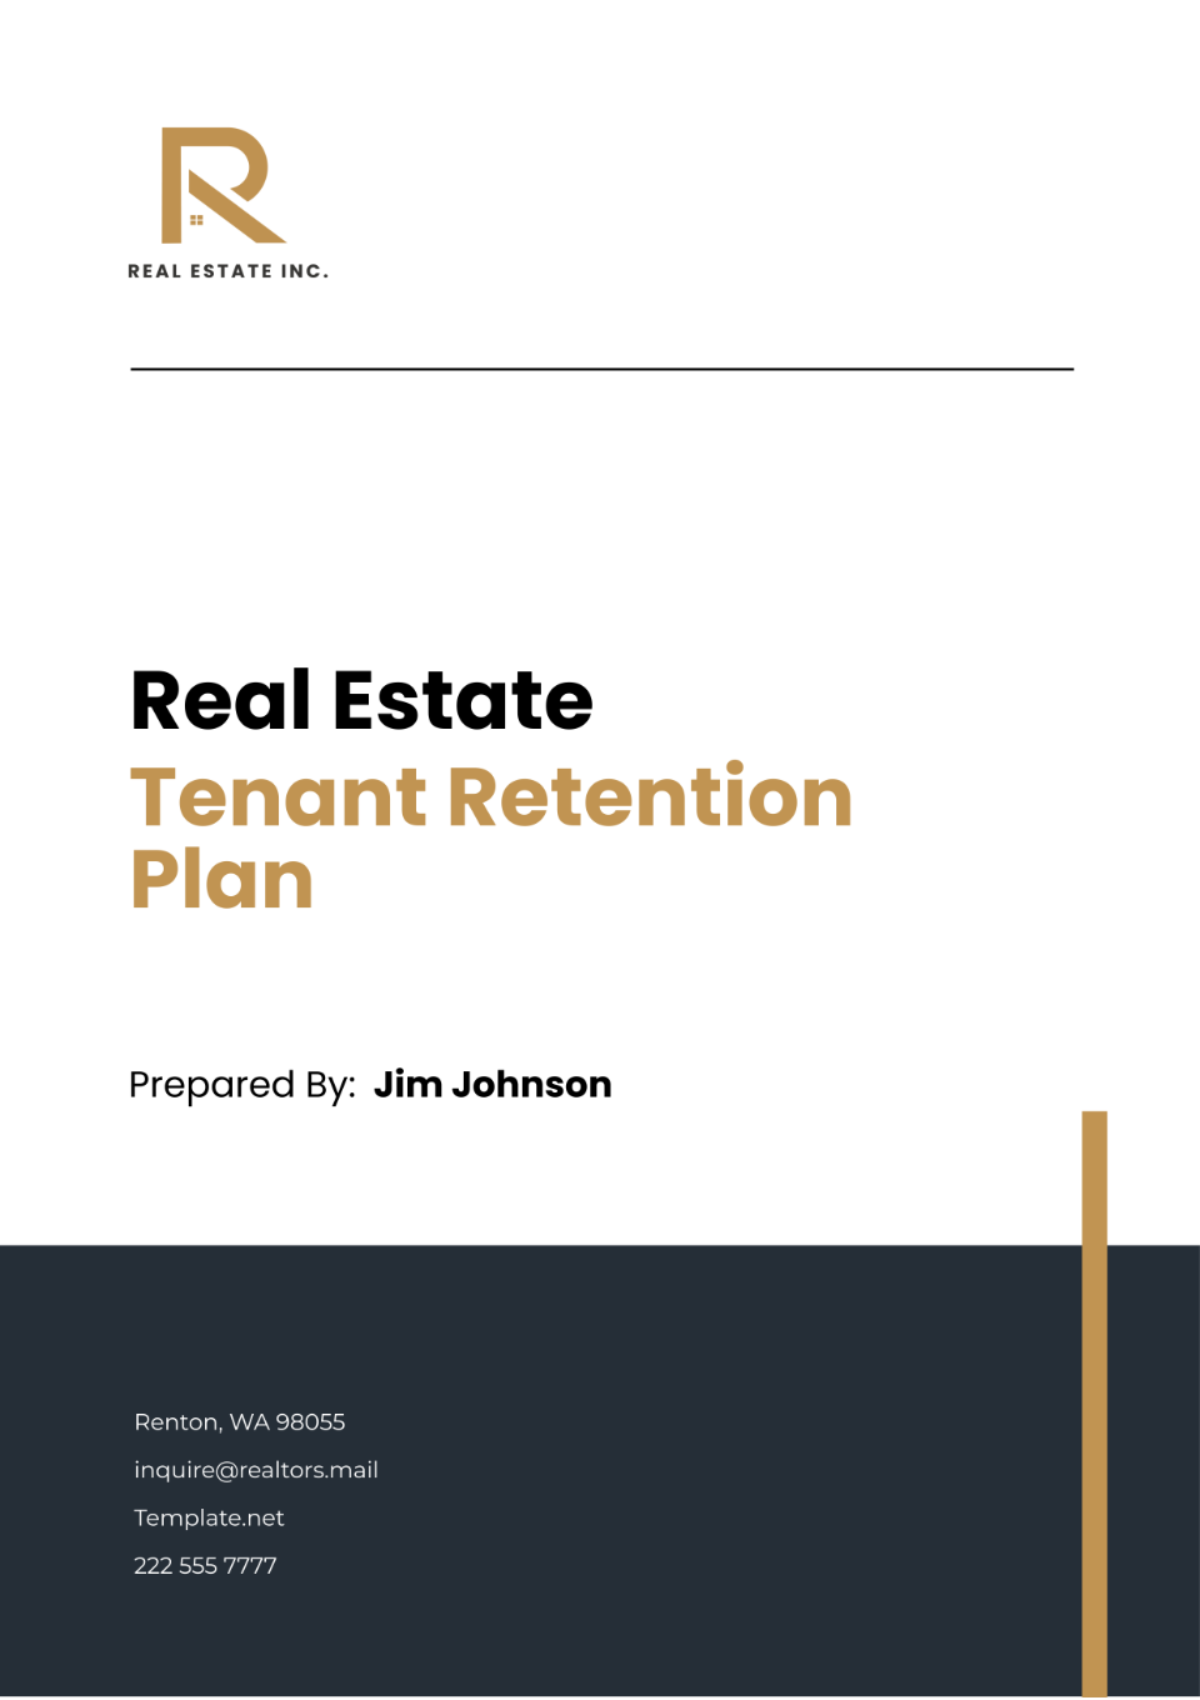 Real Estate Tenant Retention Plan Template